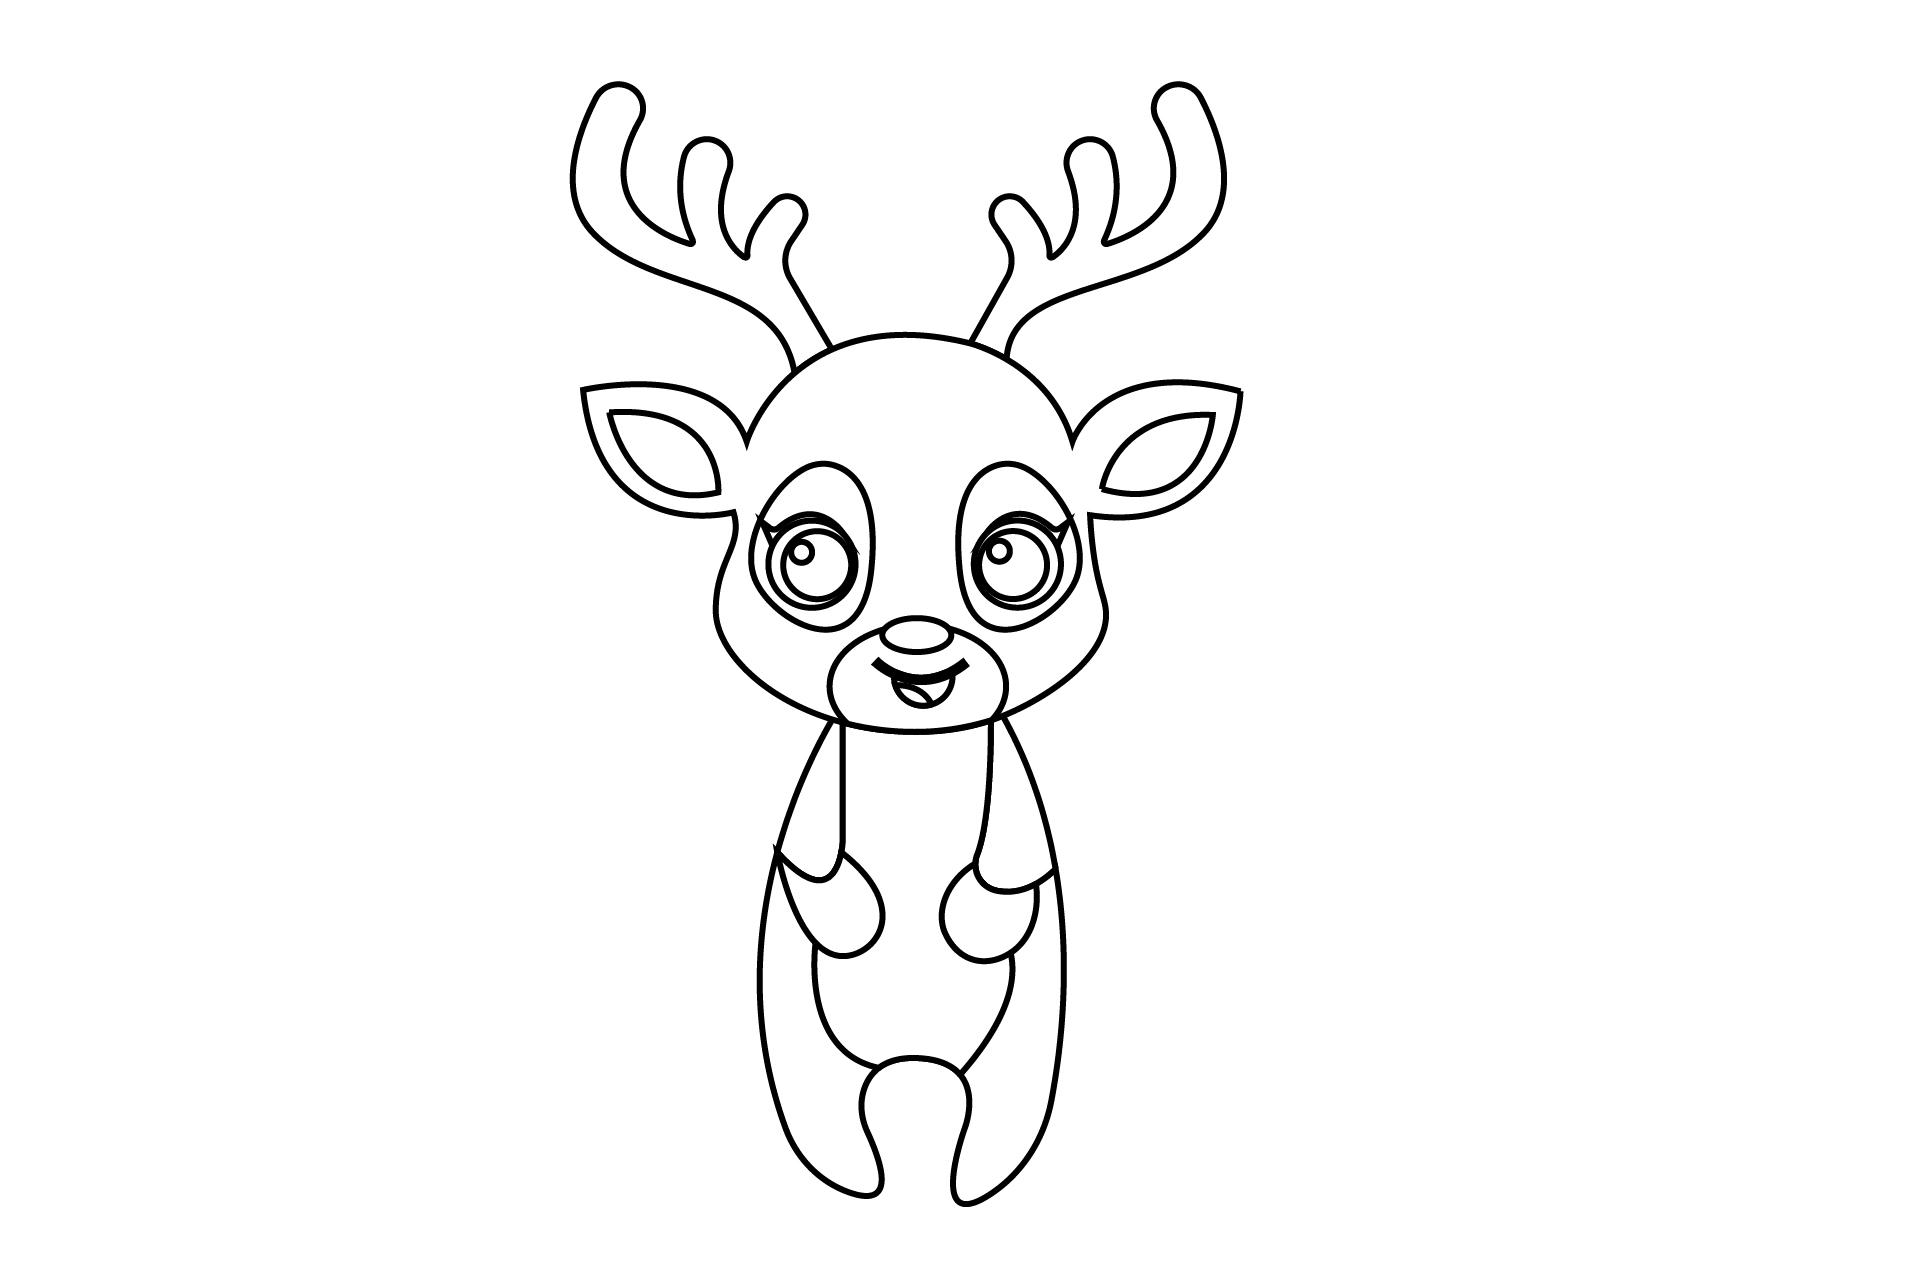 Kids Coloring Animal Deer Vector Graphic by vijackstudio · Creative Fabrica